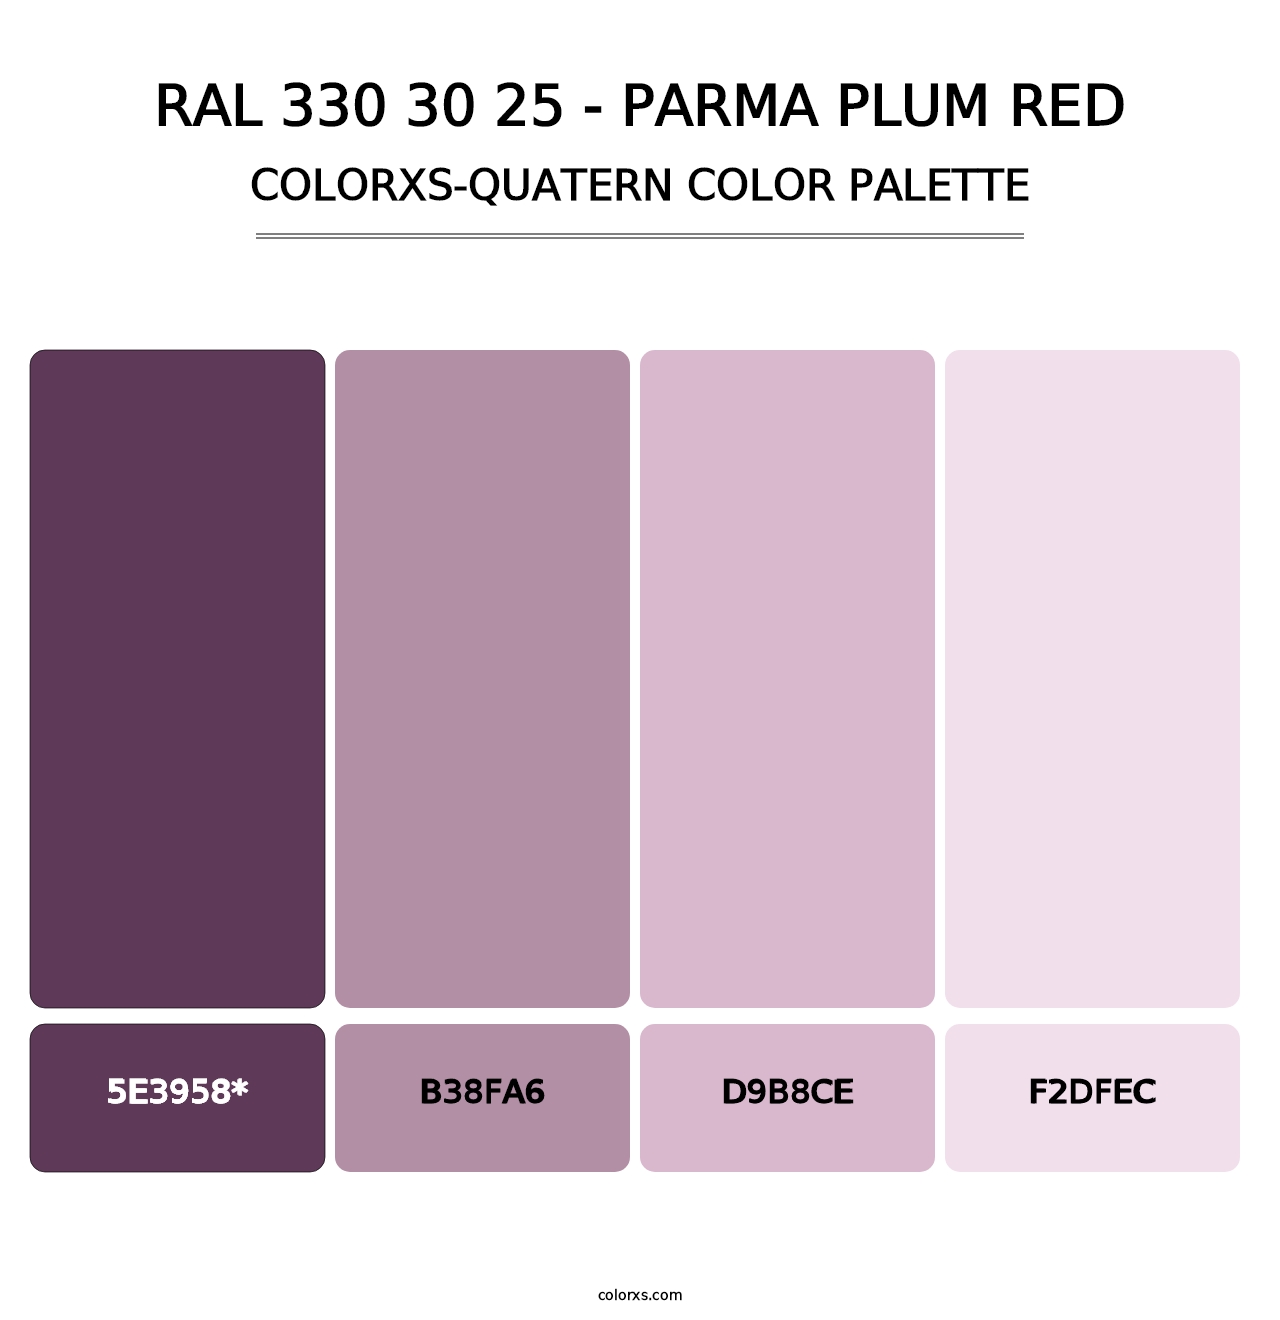 RAL 330 30 25 - Parma Plum Red - Colorxs Quatern Palette